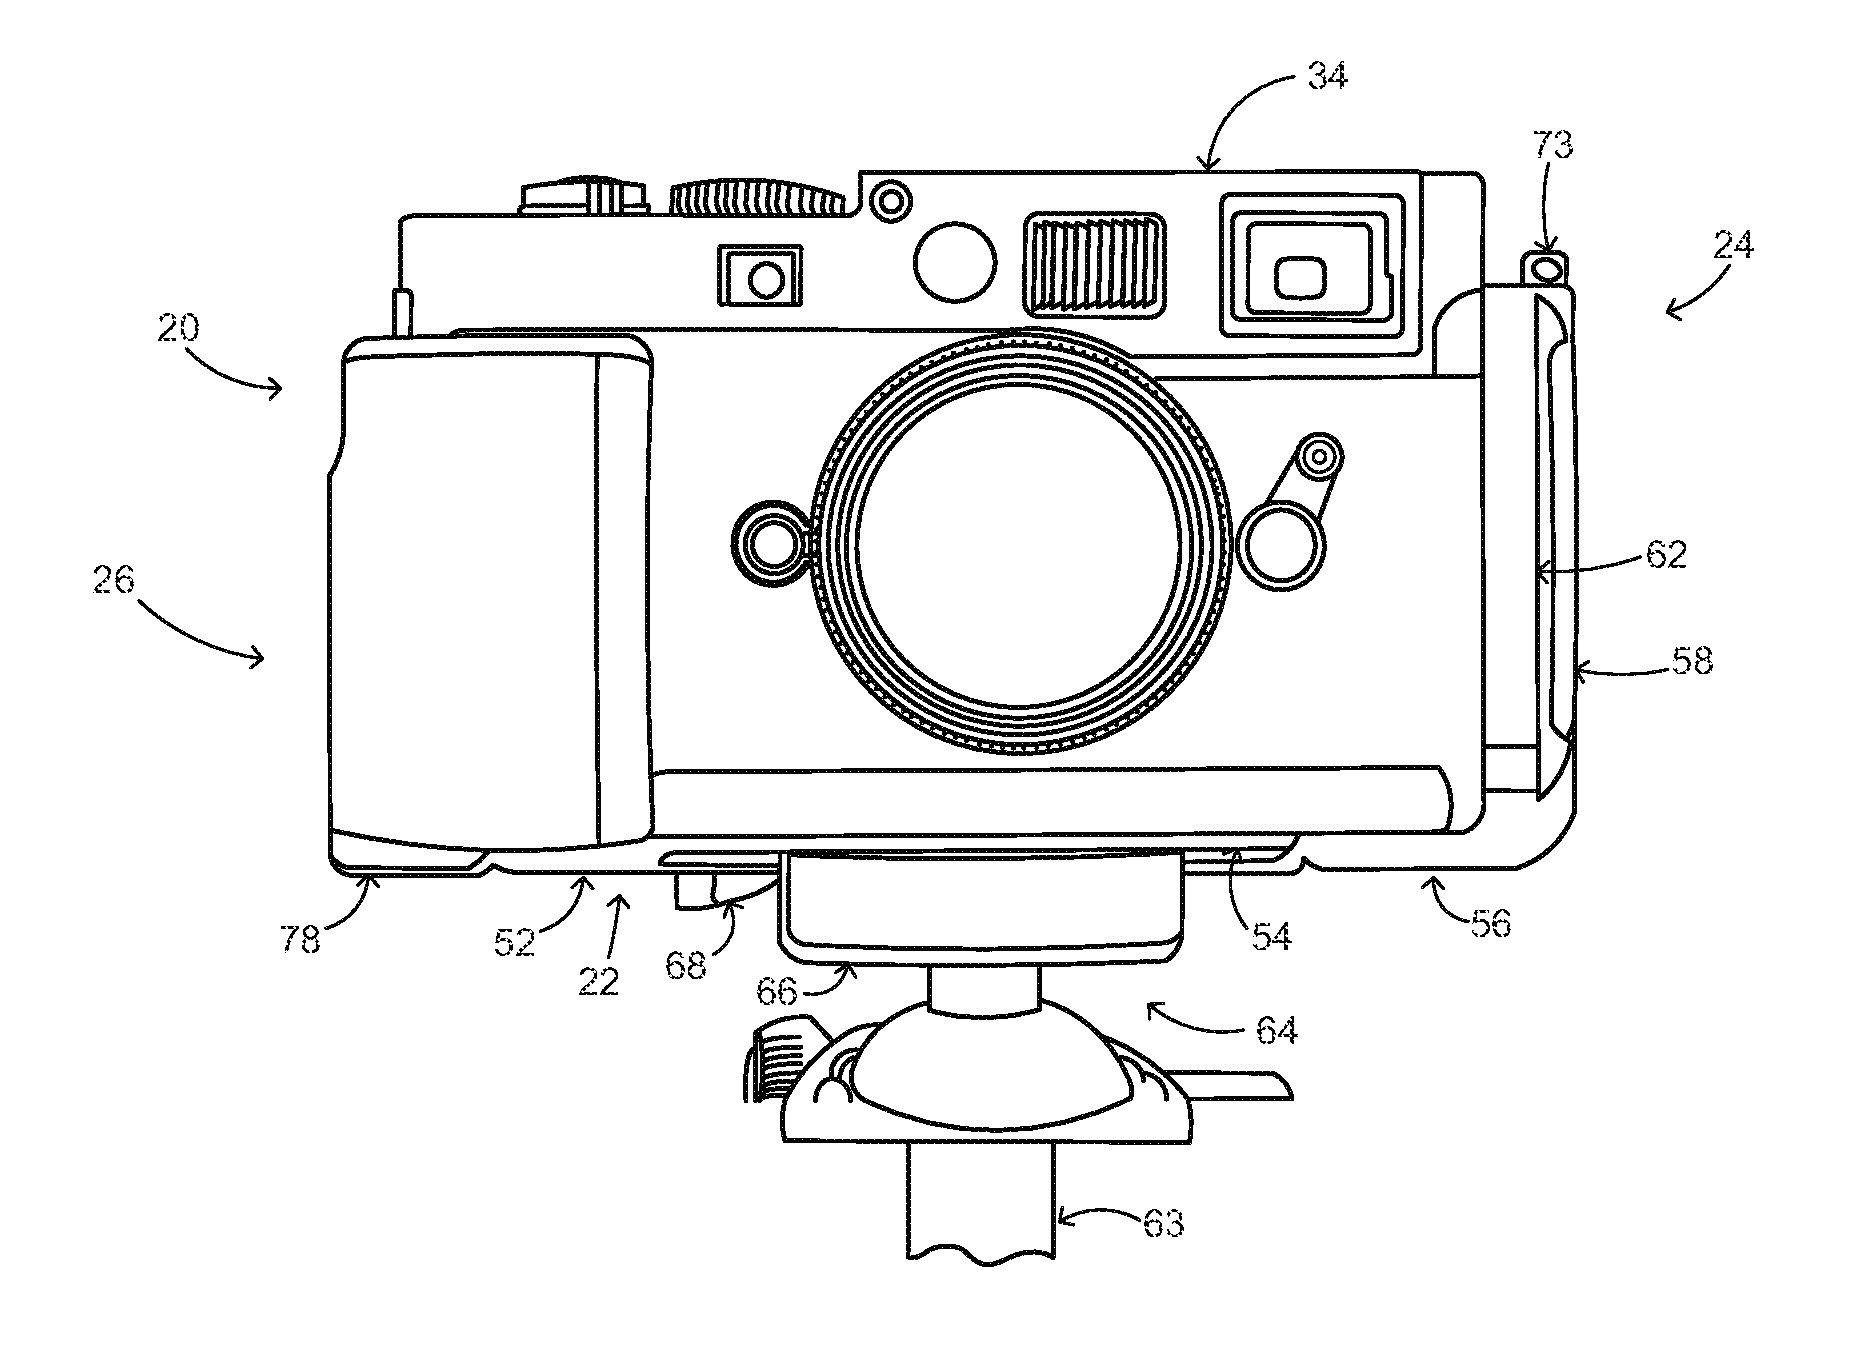 Camera mounting assembly